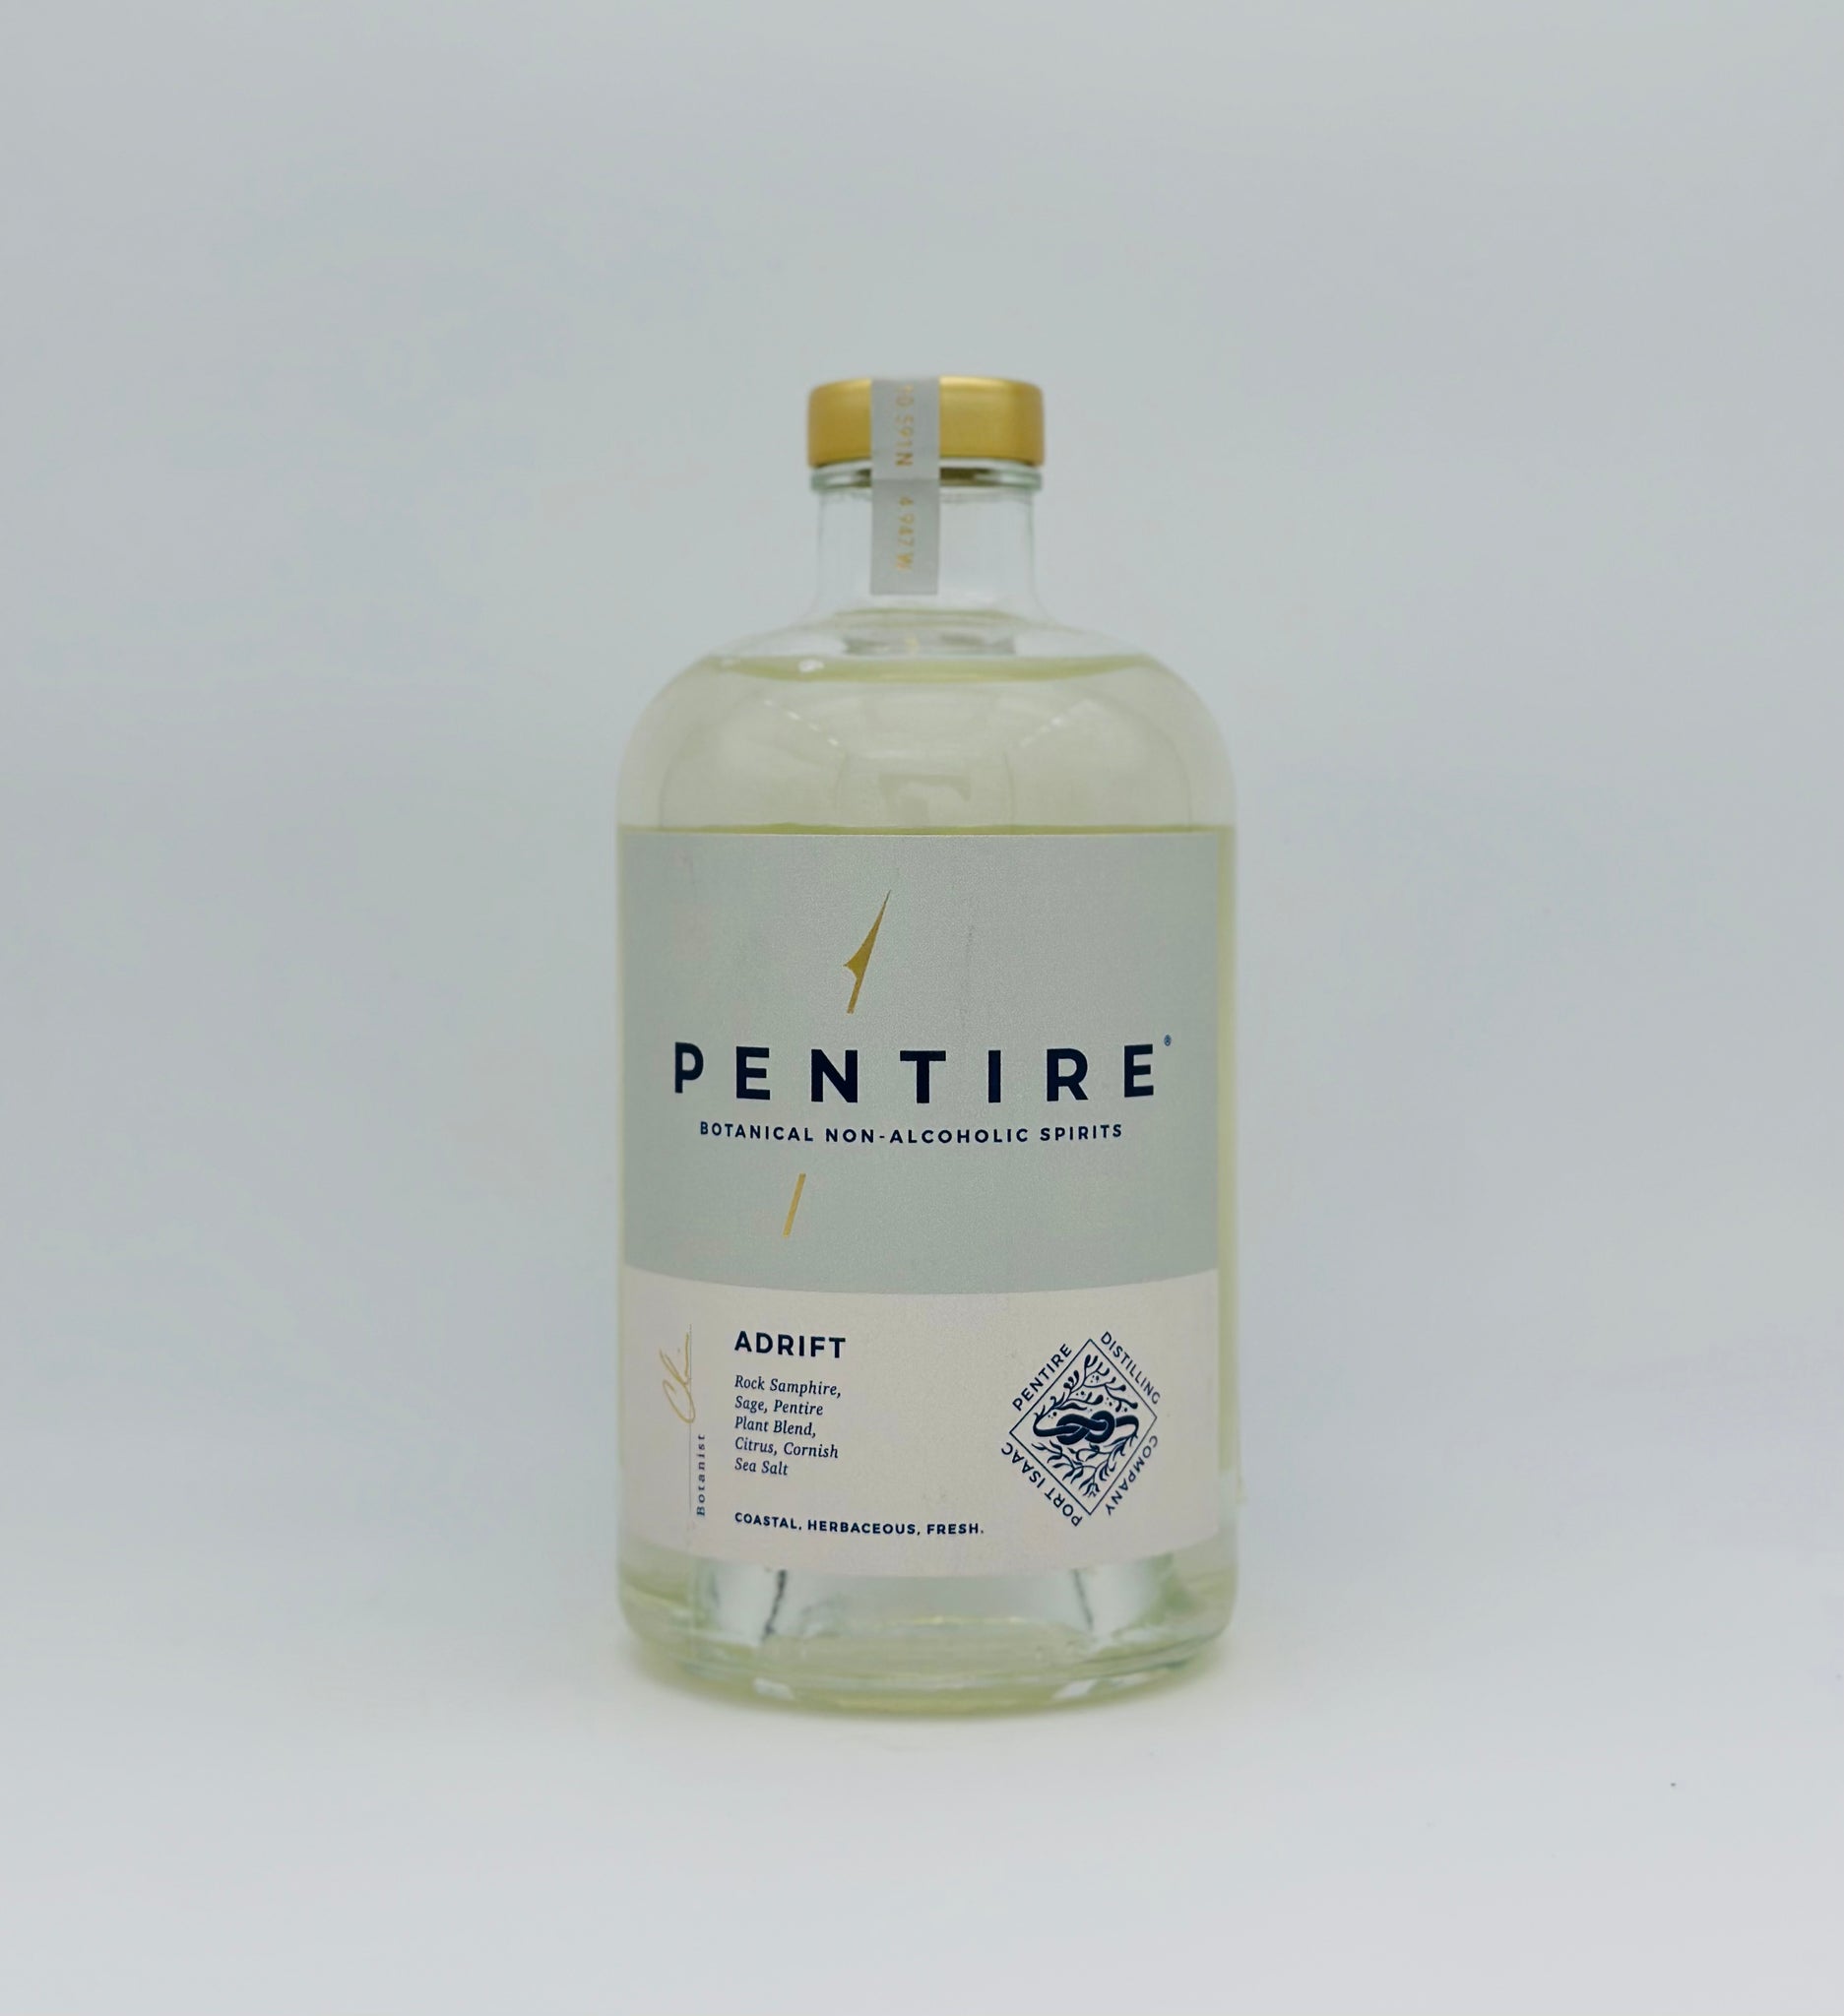 Pentire Adrift Botanical non-Alcoholic Spirit 70cl